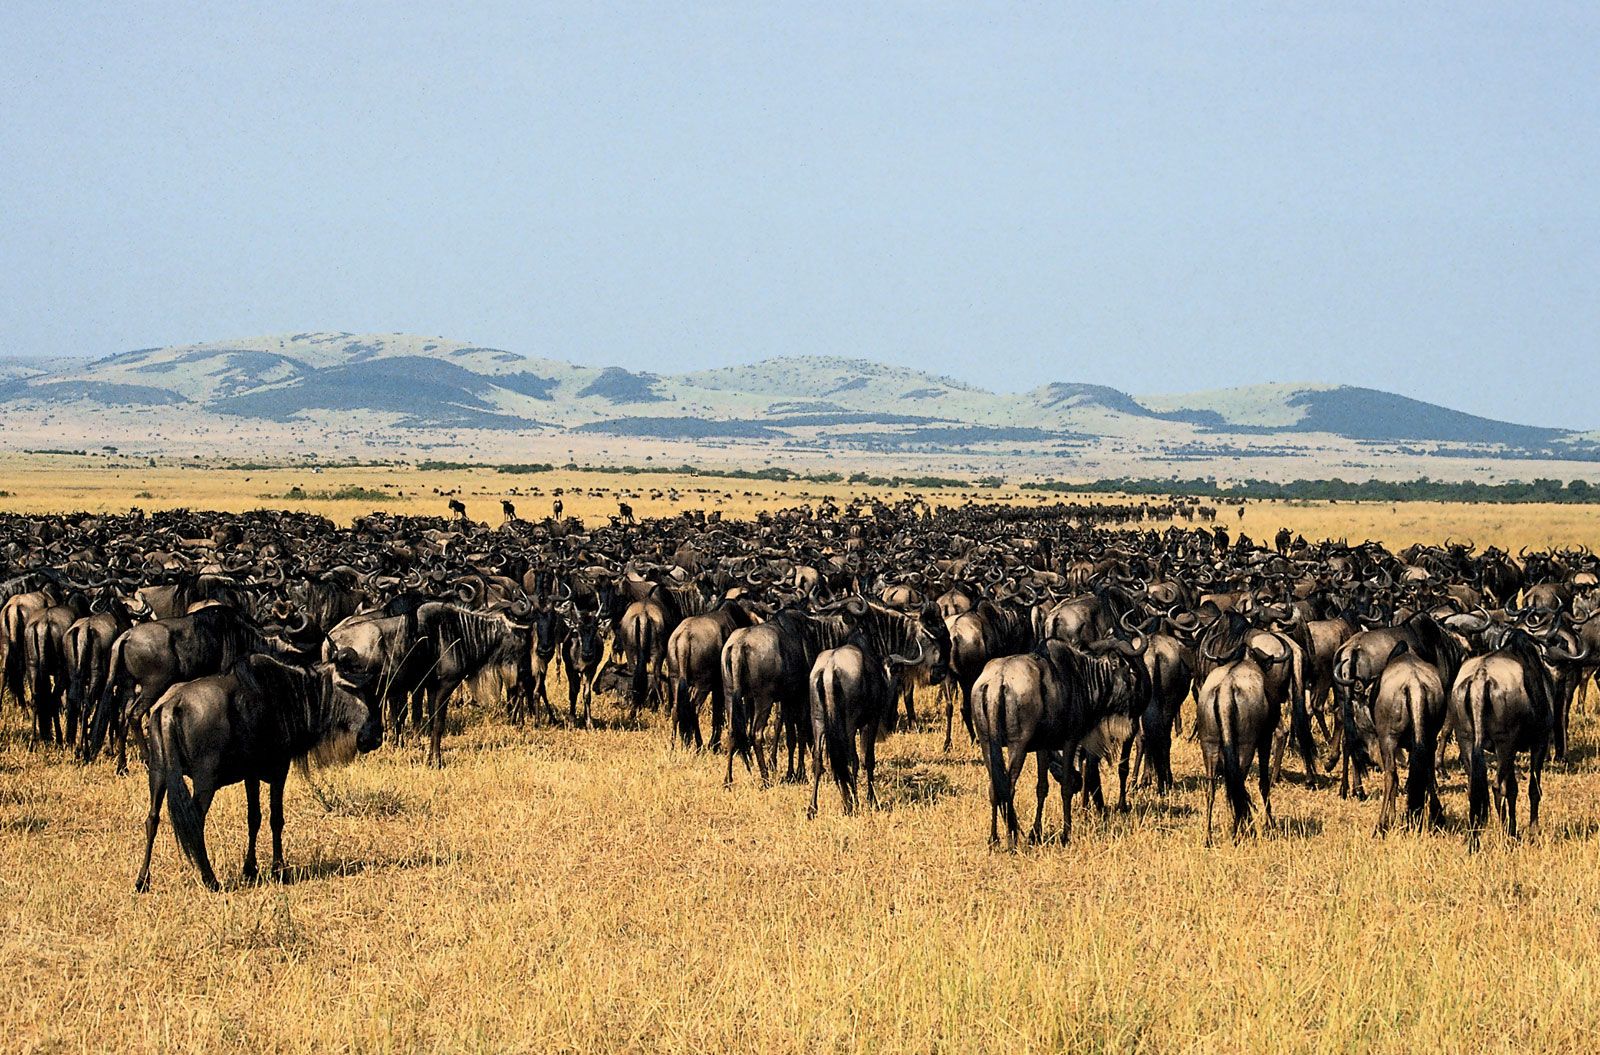 Serengeti national park Tanzania